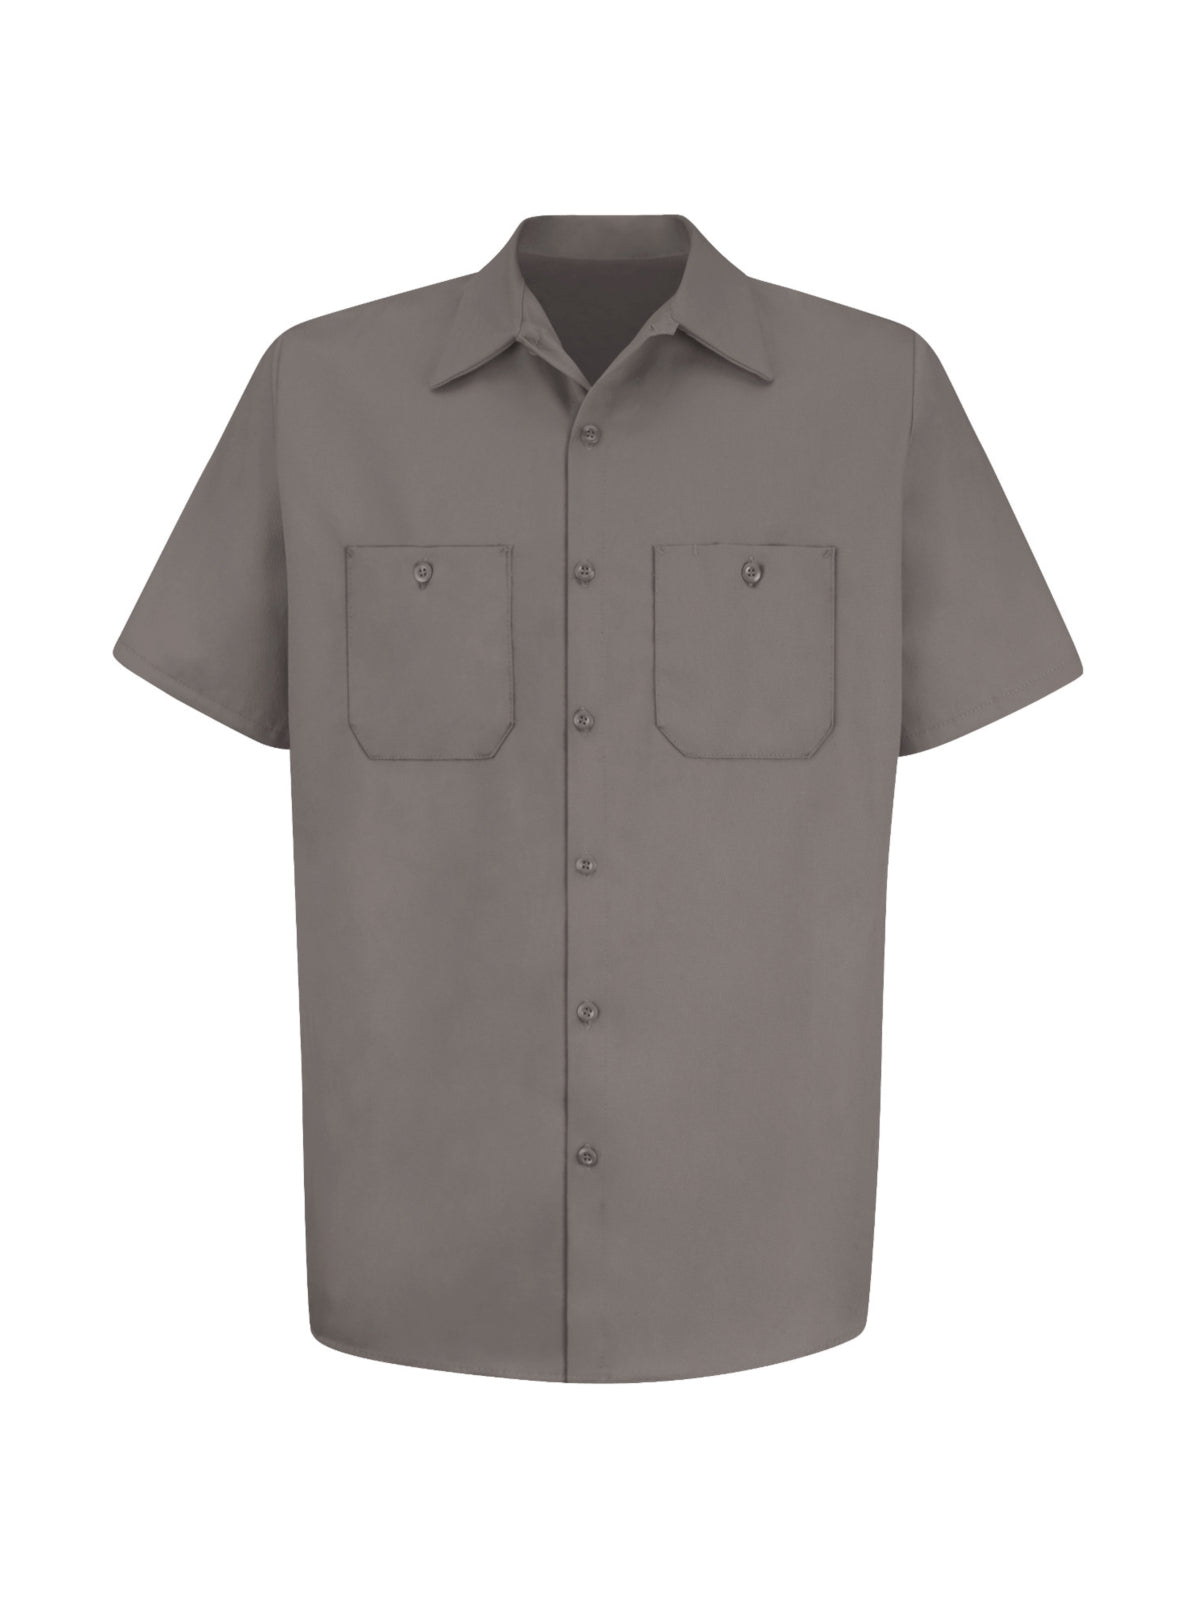 Men's Short Sleeve Wrinkle-Resistant Cotton Work Shirt - SC40 - Graphite Grey